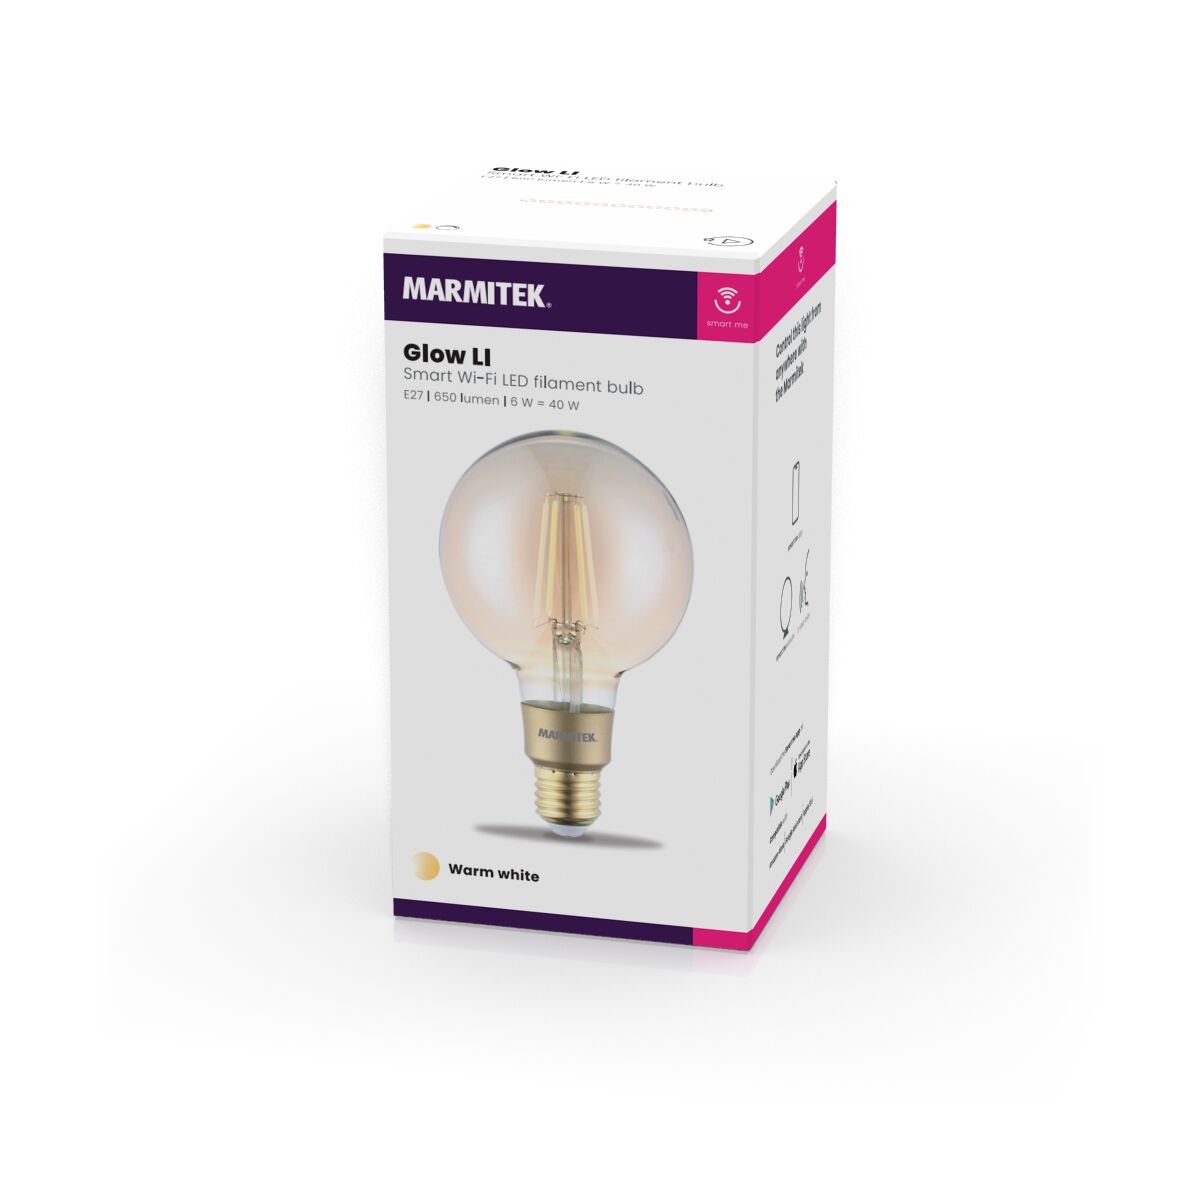 Glow LI - Filament bulb - 3D Packshot Image | Marmitek